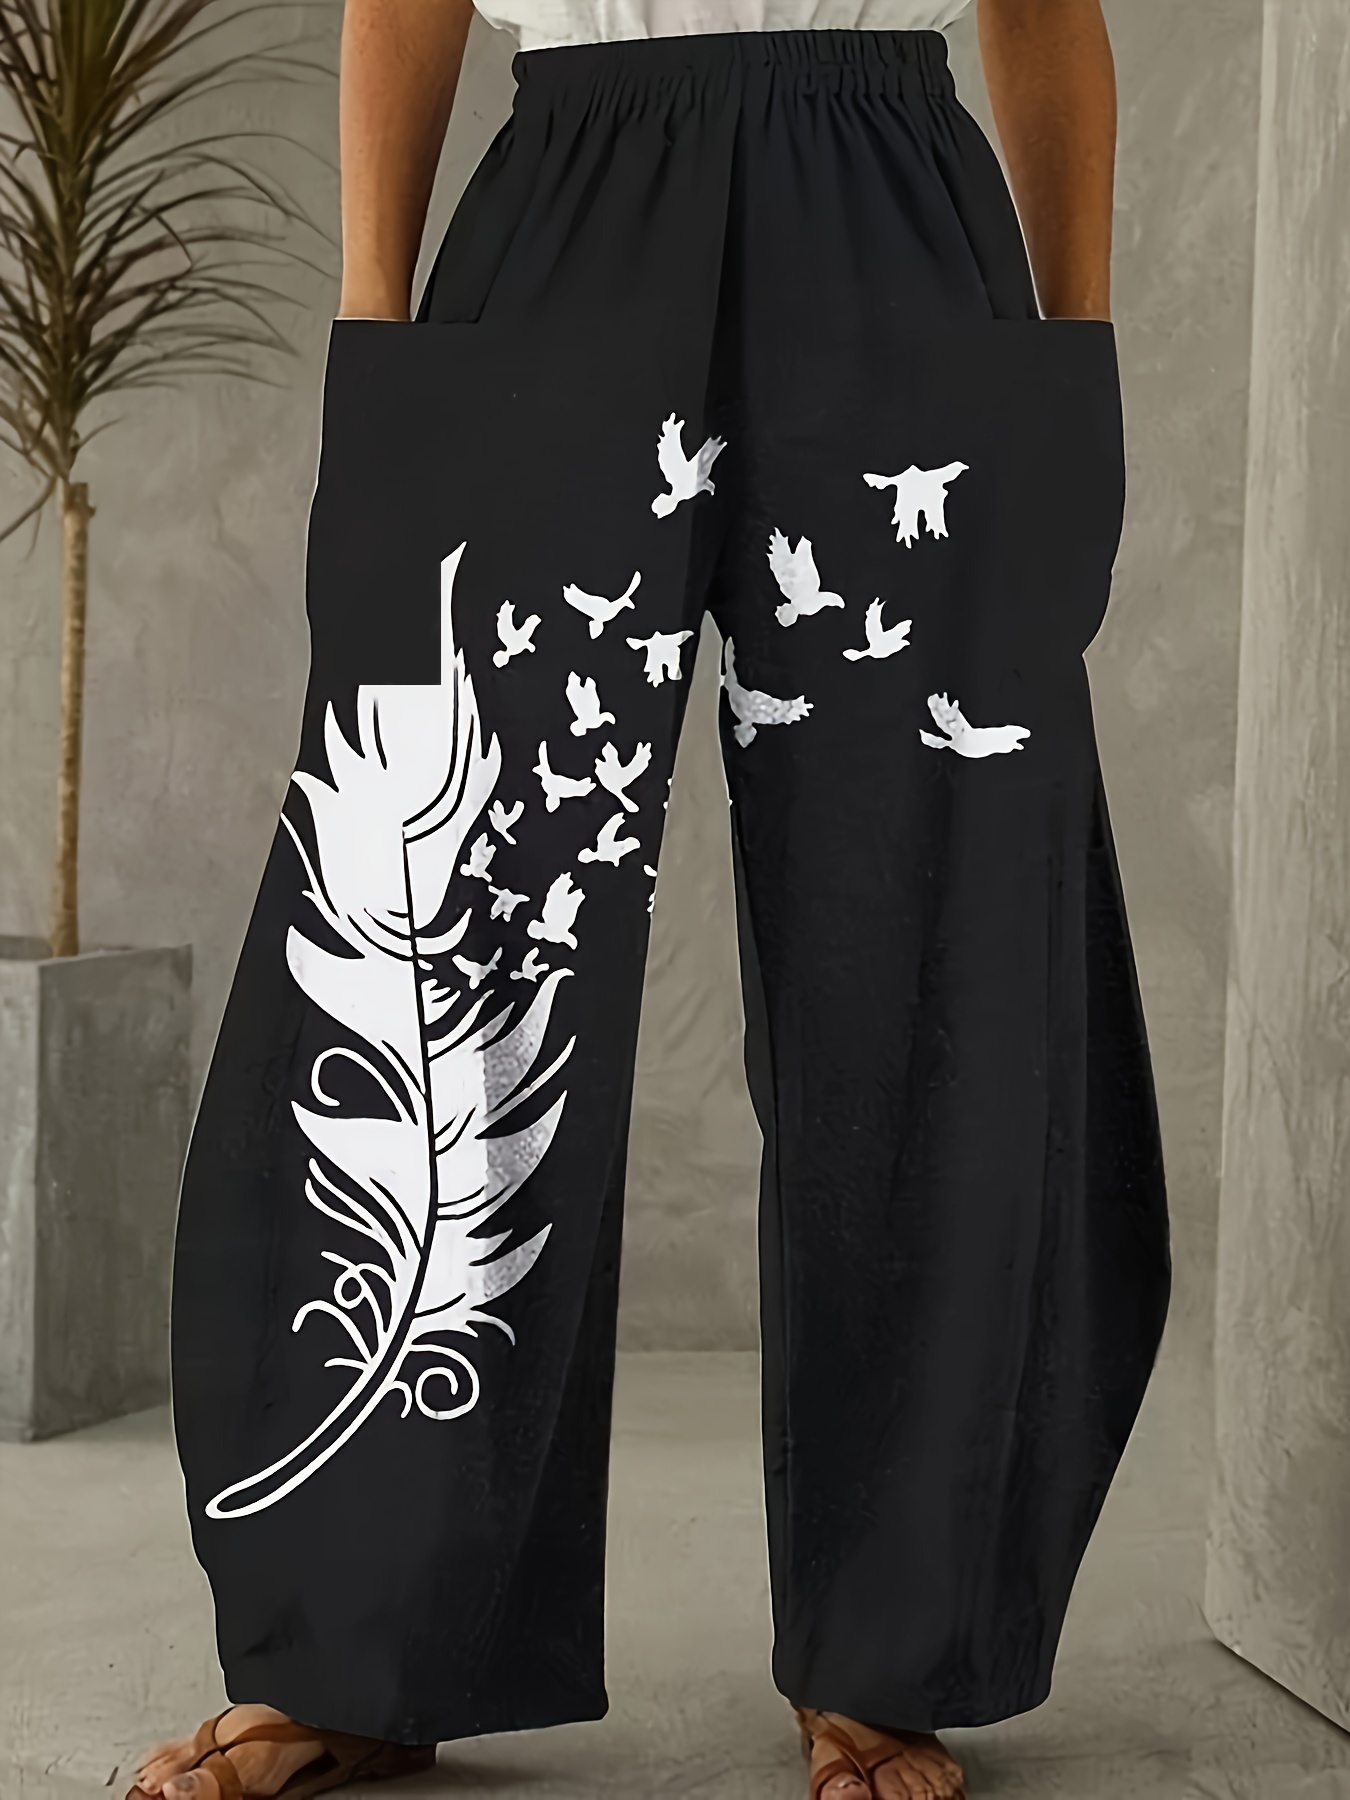 Pantalones sueltos Casuales Vintage com estampa navideño para Mujer  Pantalones Anchos Casuales para Mujer # U1538, Multicor, Medium